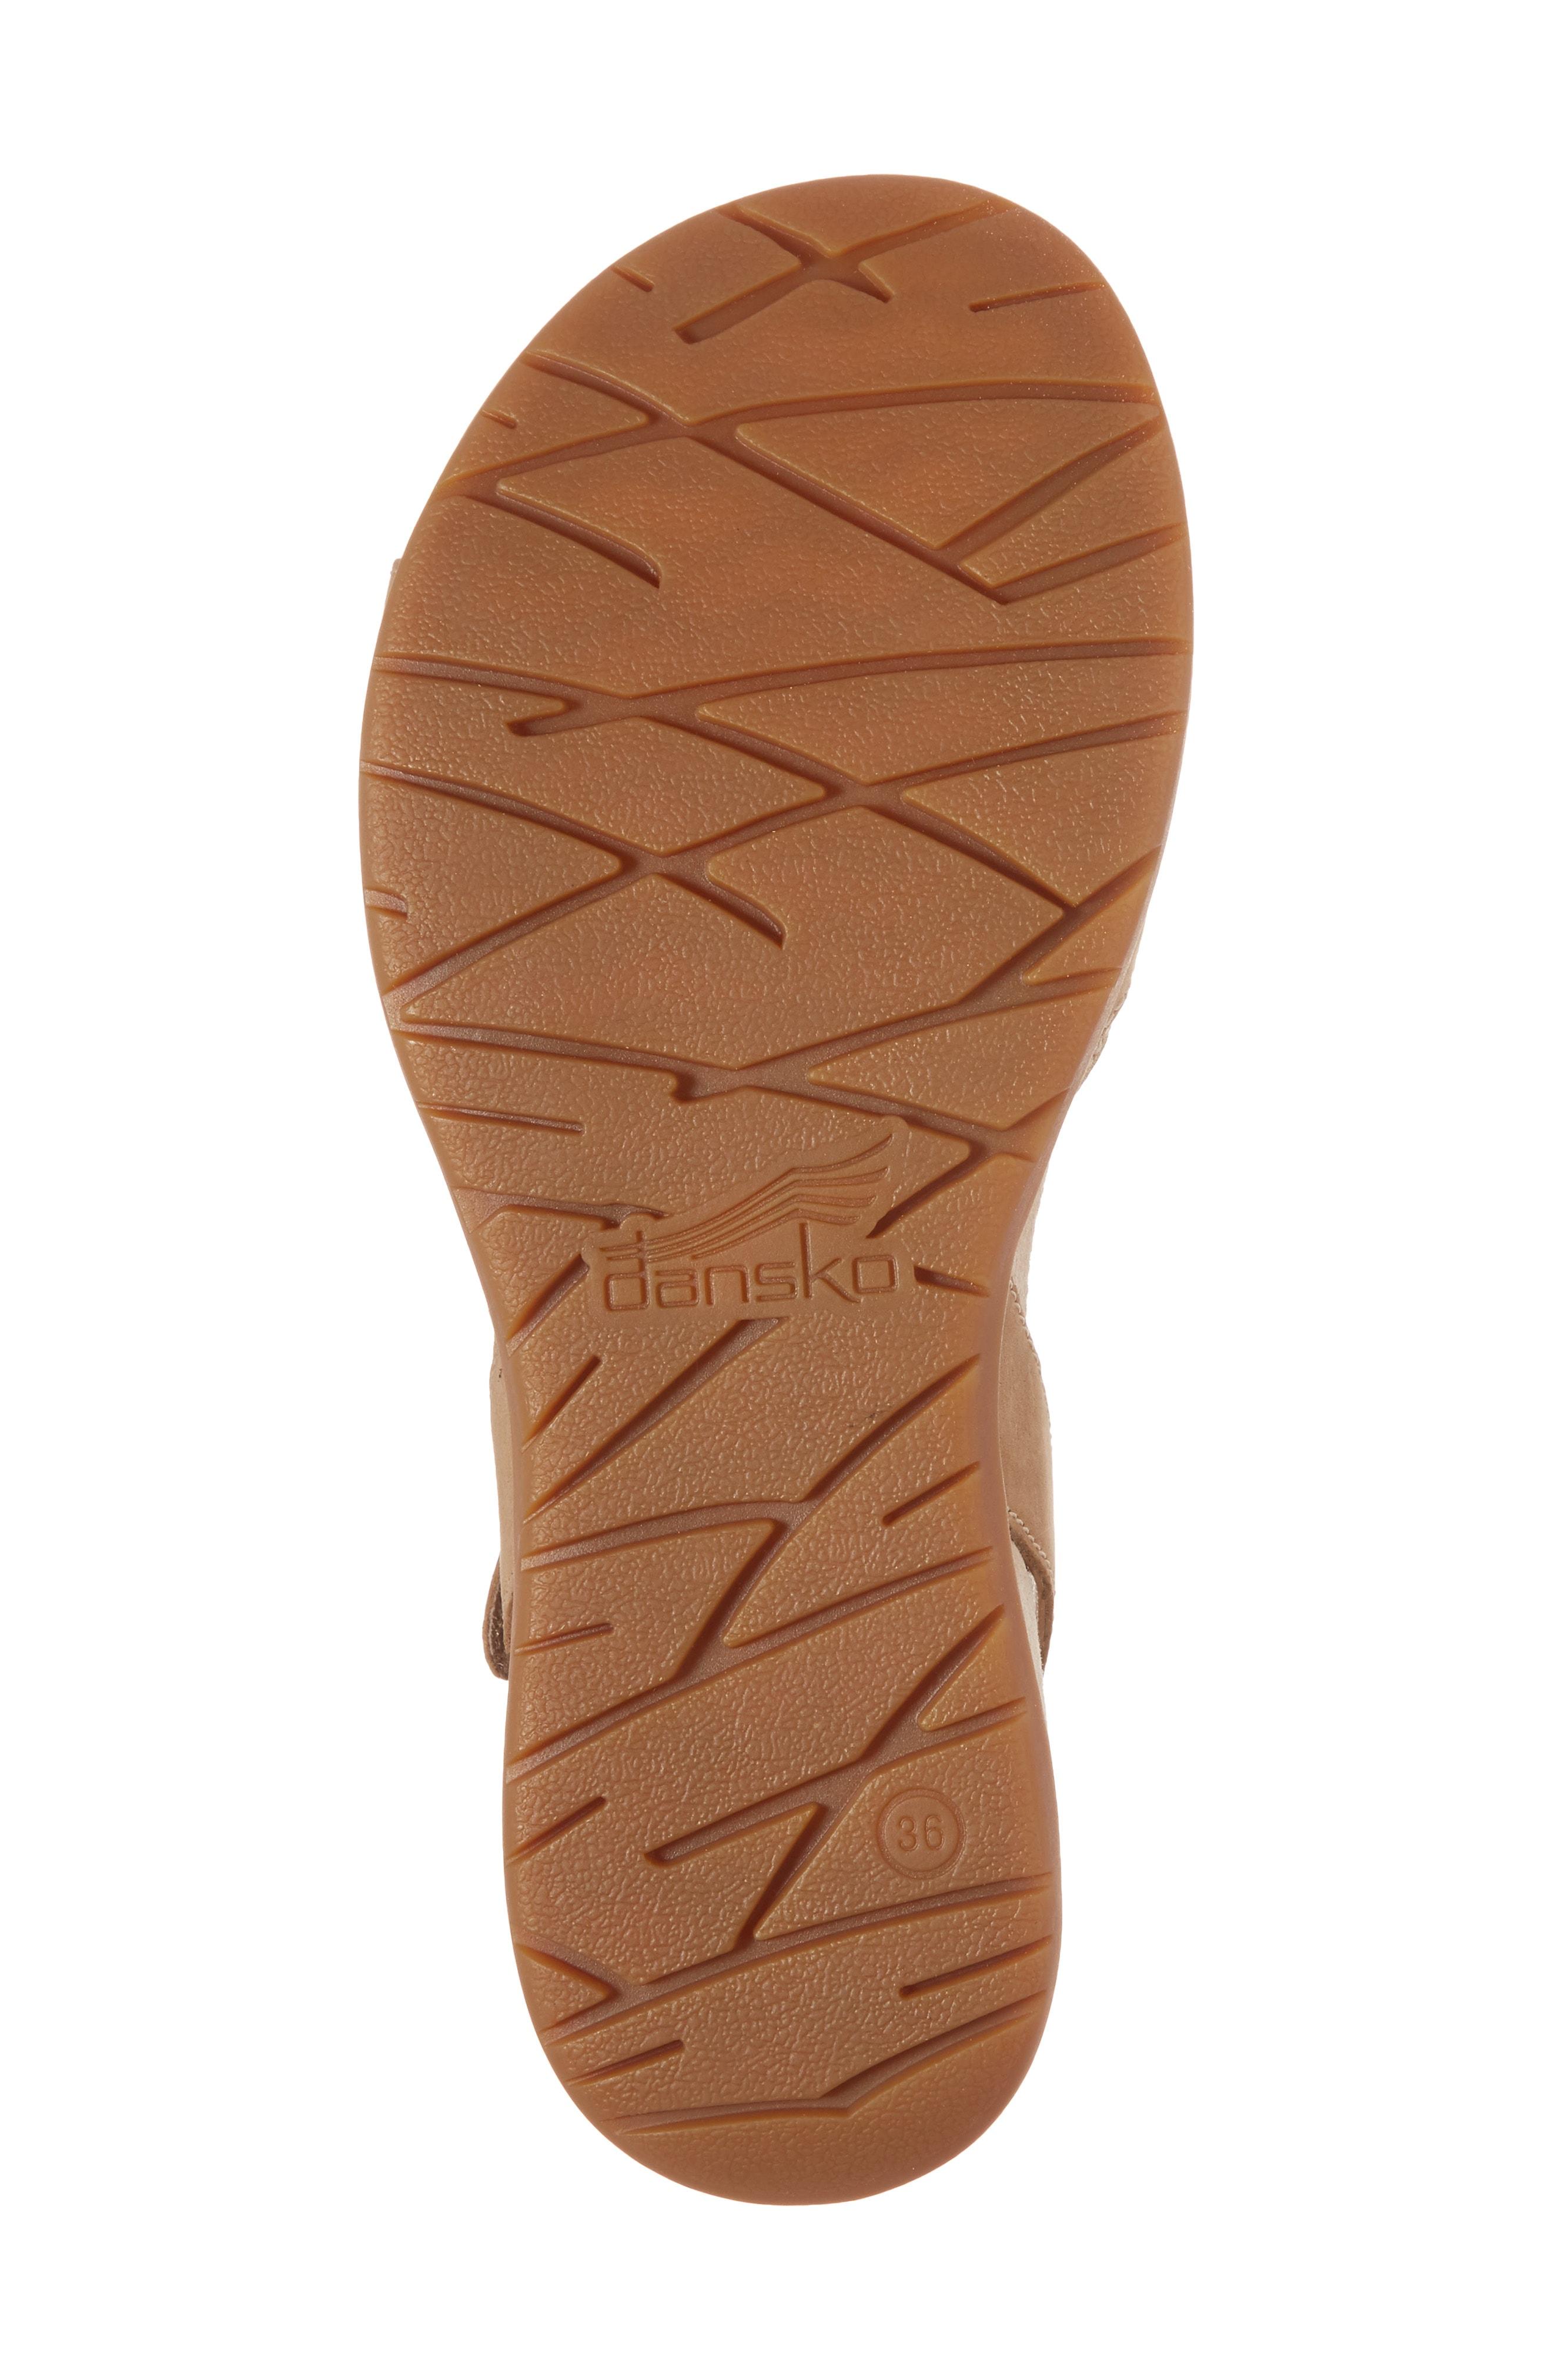 Dansko Blythe Sandal In Sand Milled Nubuck Leather | ModeSens